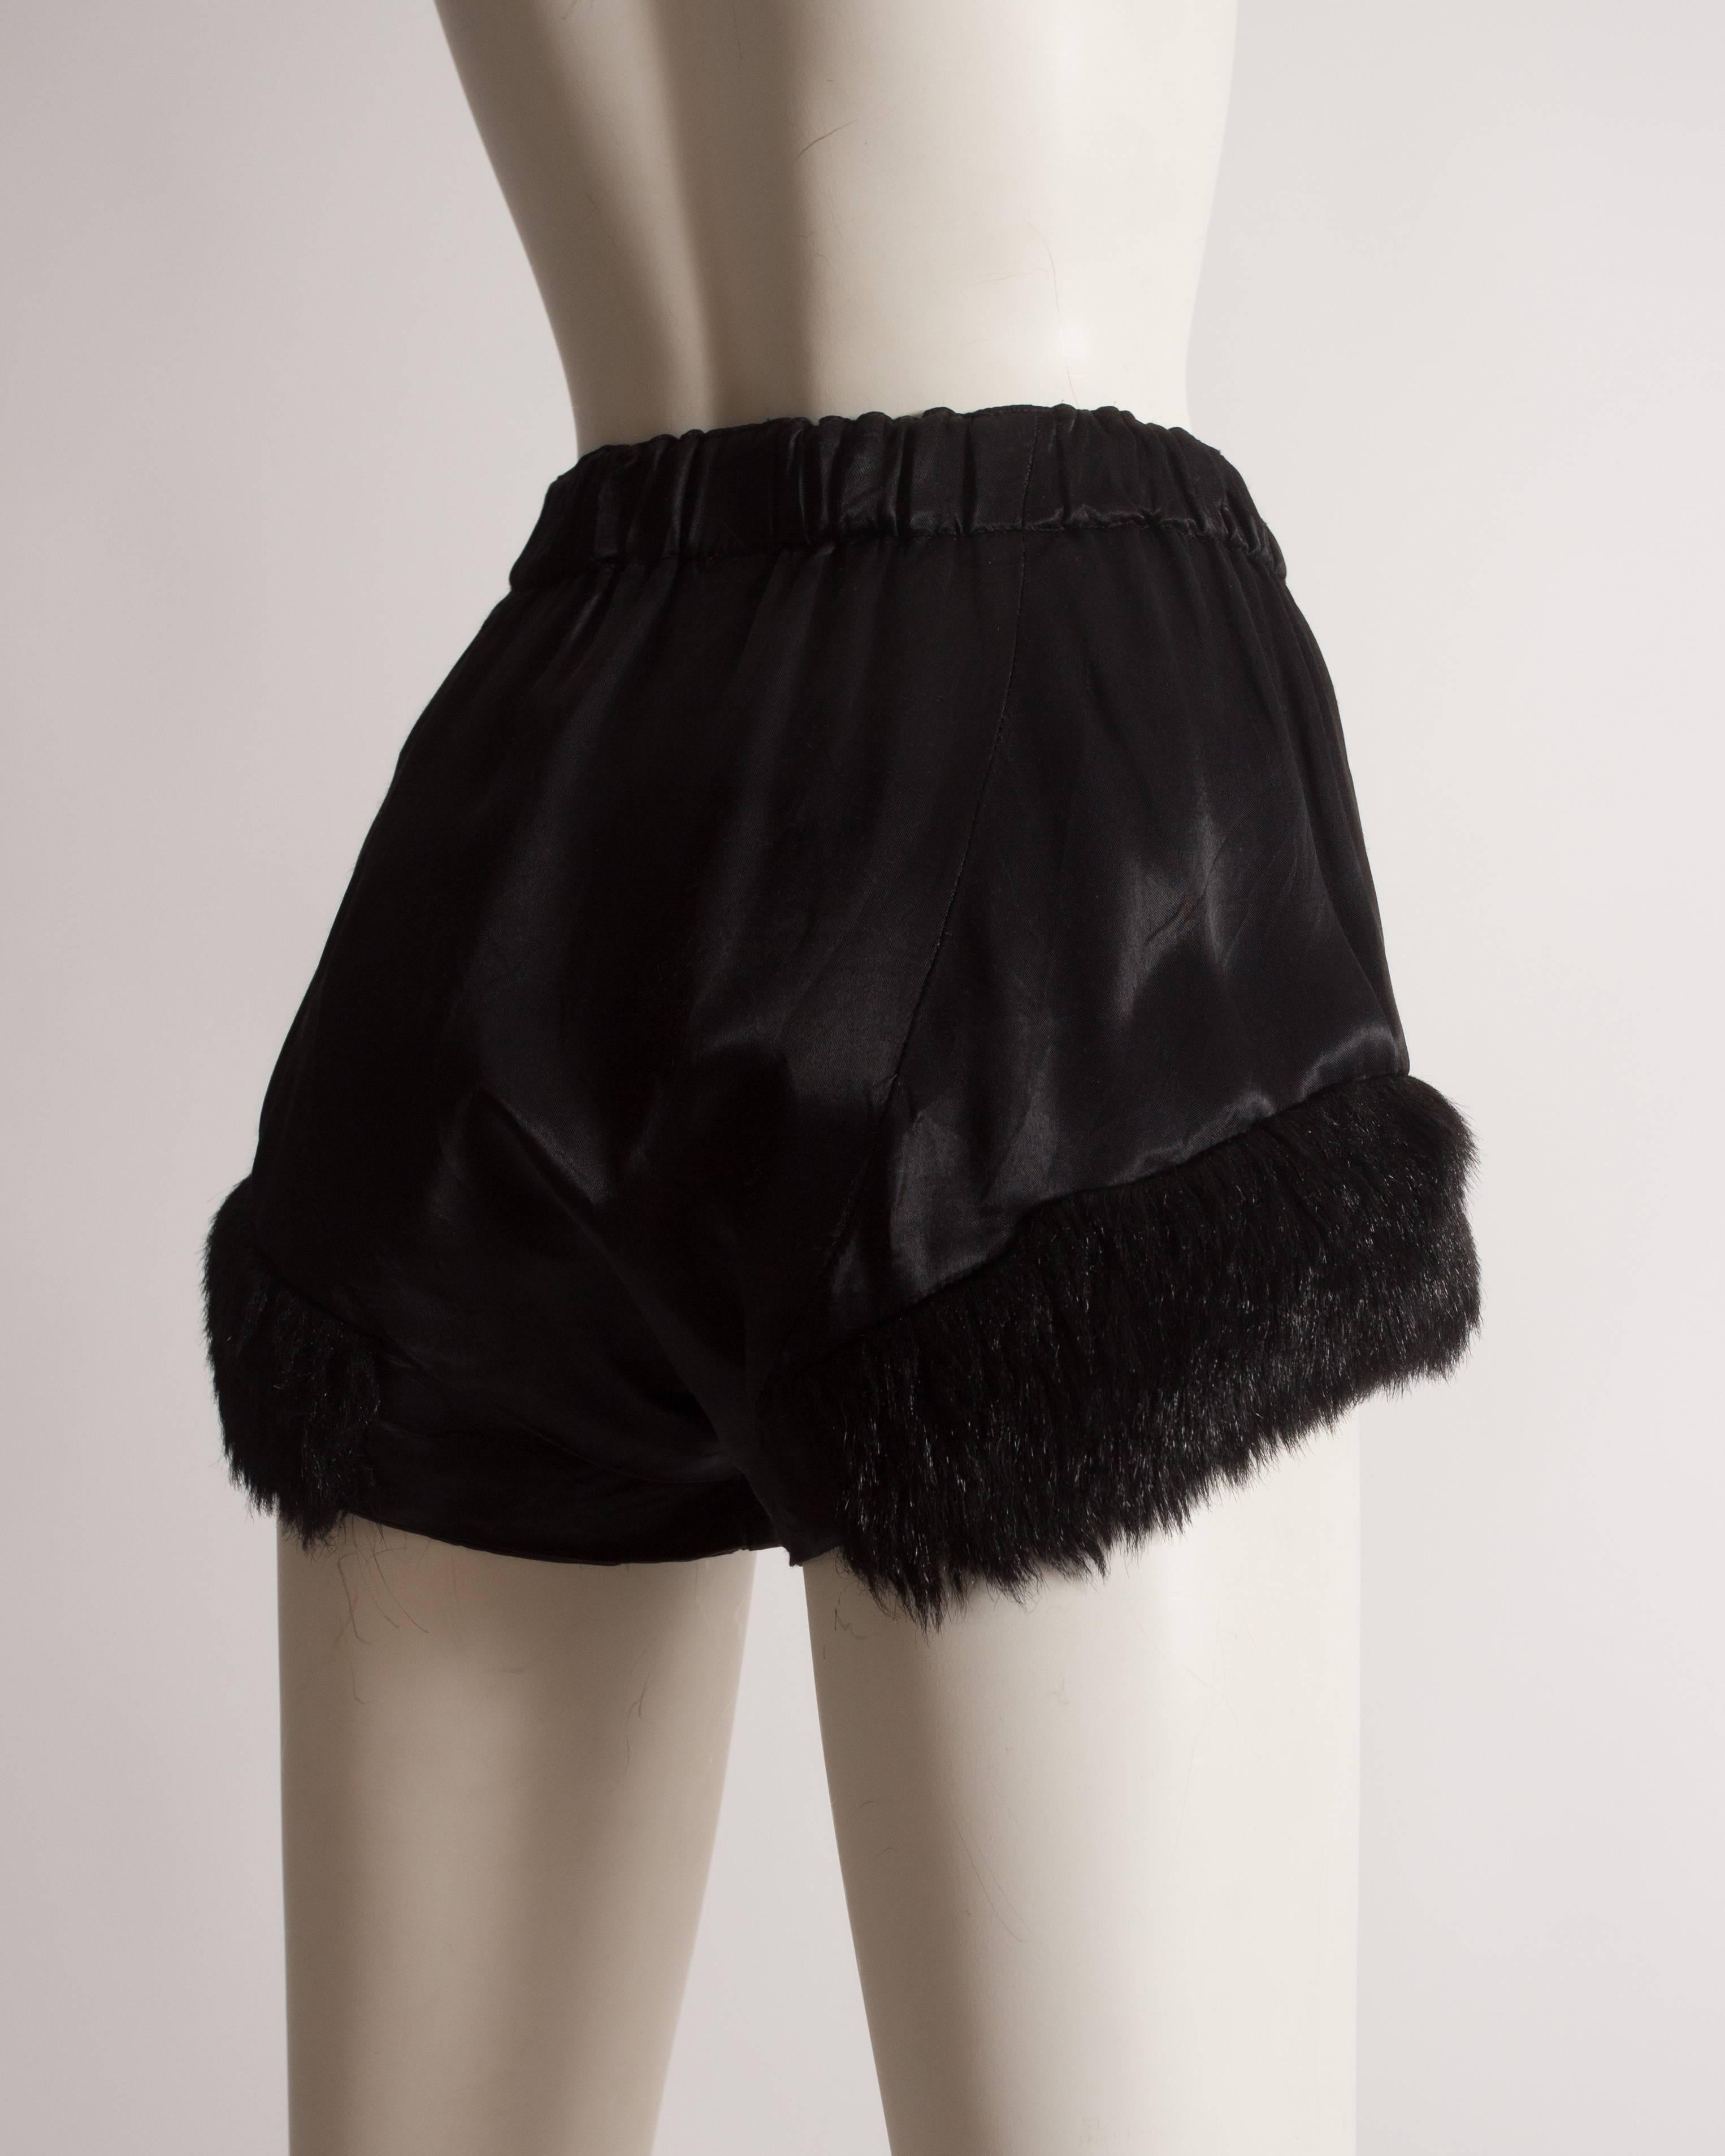 Black Vivienne Westwood black satin mini shorts with faux fur, circa 1991